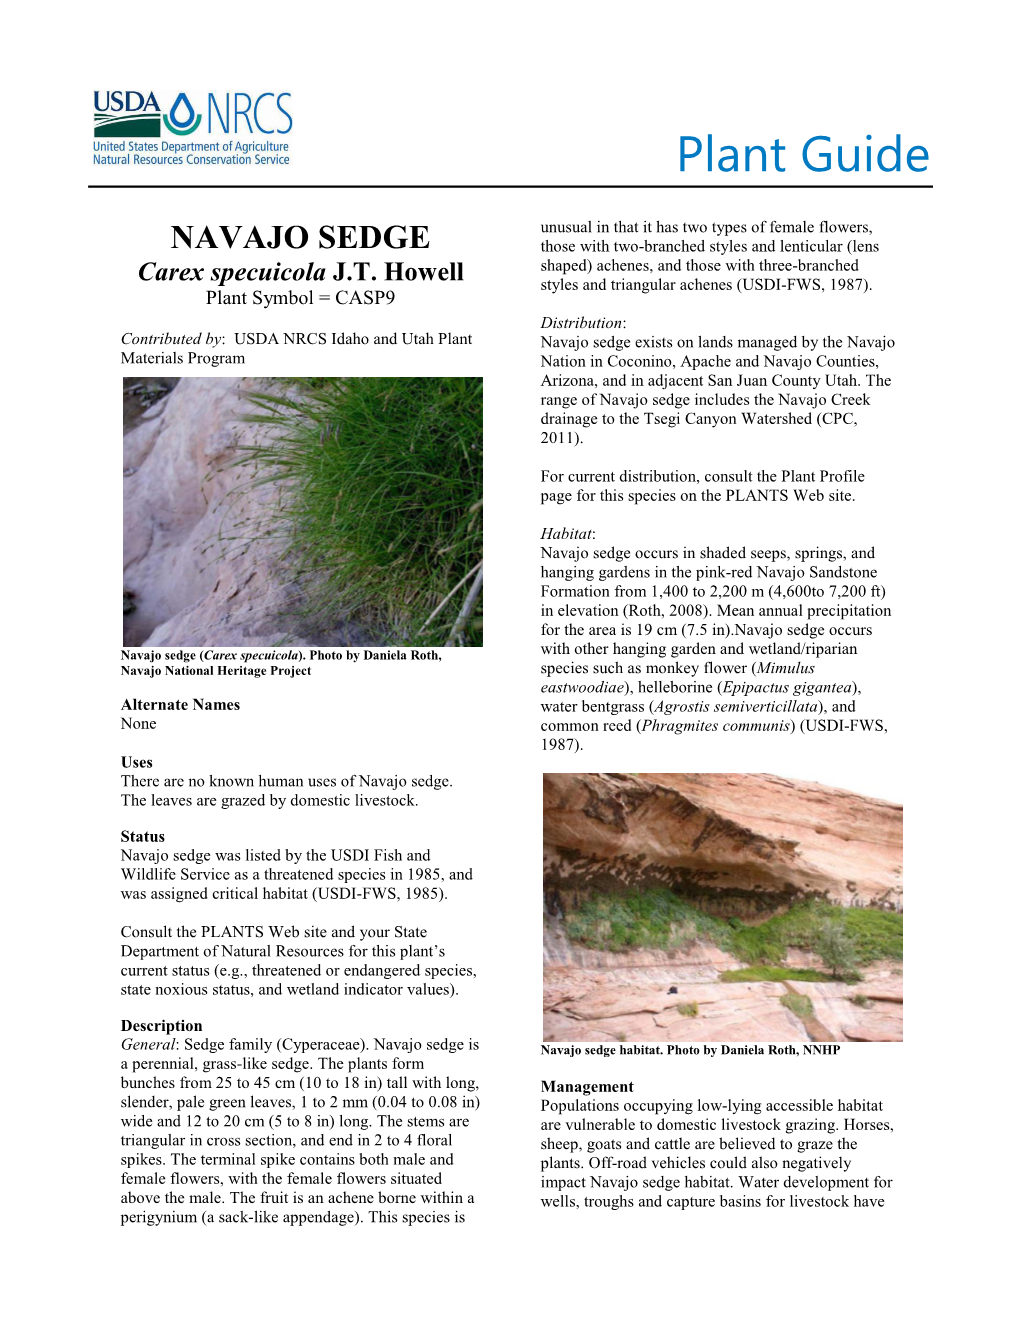 Plant Guide for Navajo Sedge (Carex Specuicola)